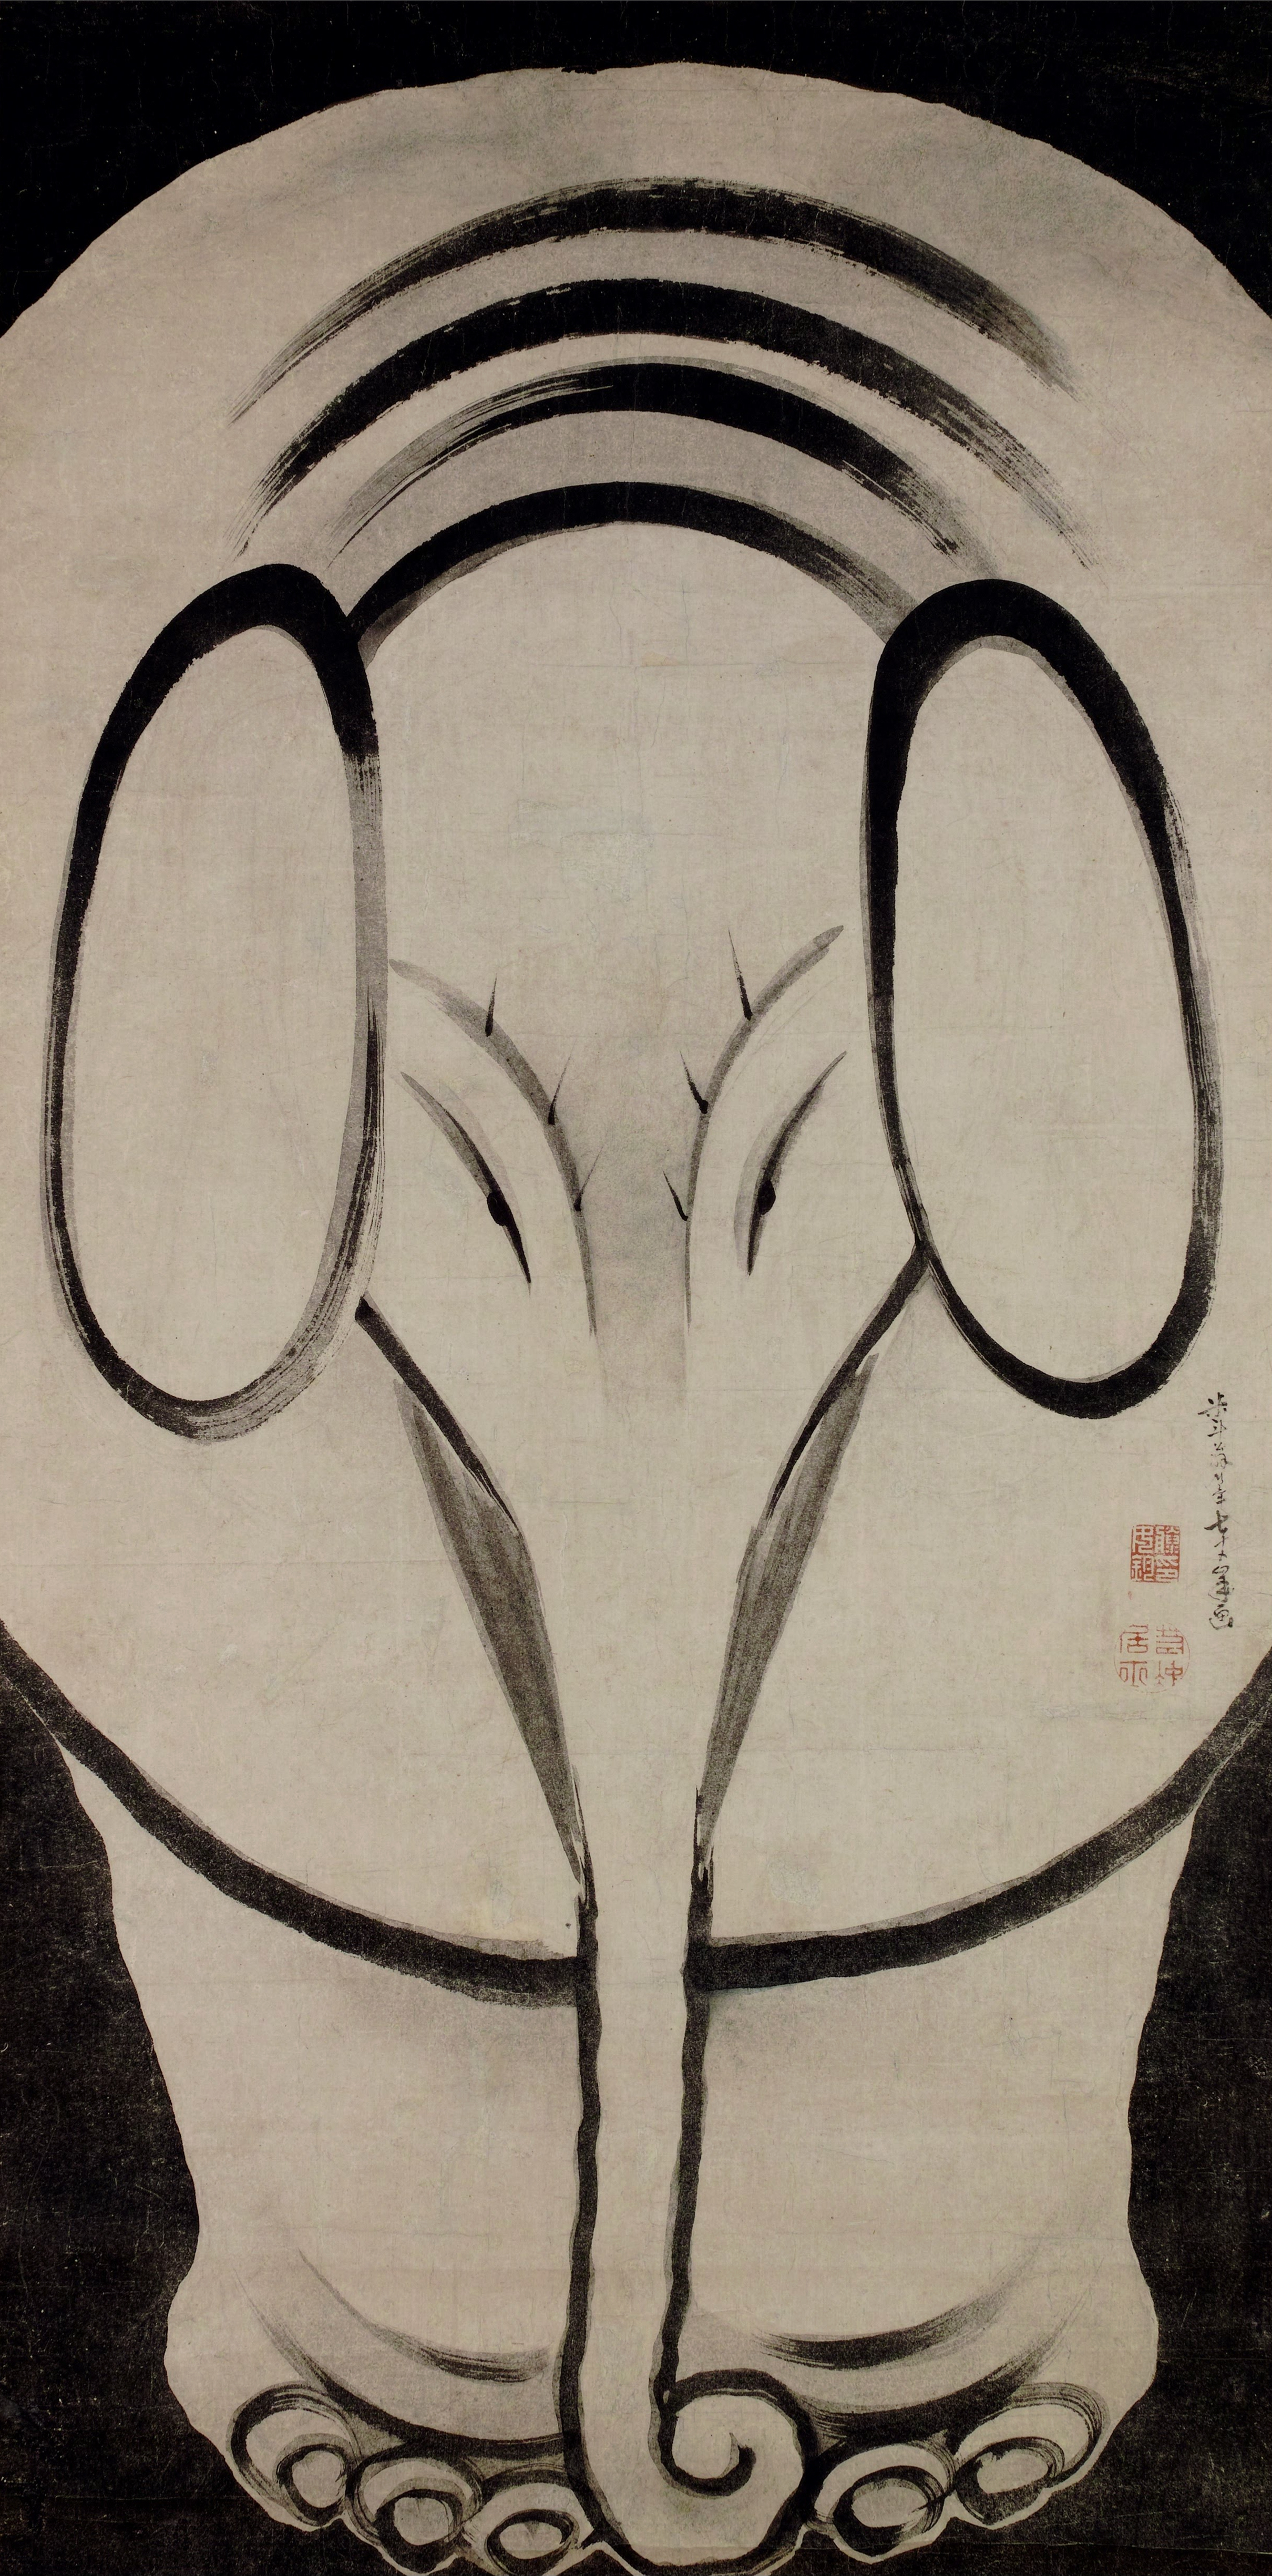 Слон by Itō Jakuchū - 1790 - 155,5 см × 77,3 см 